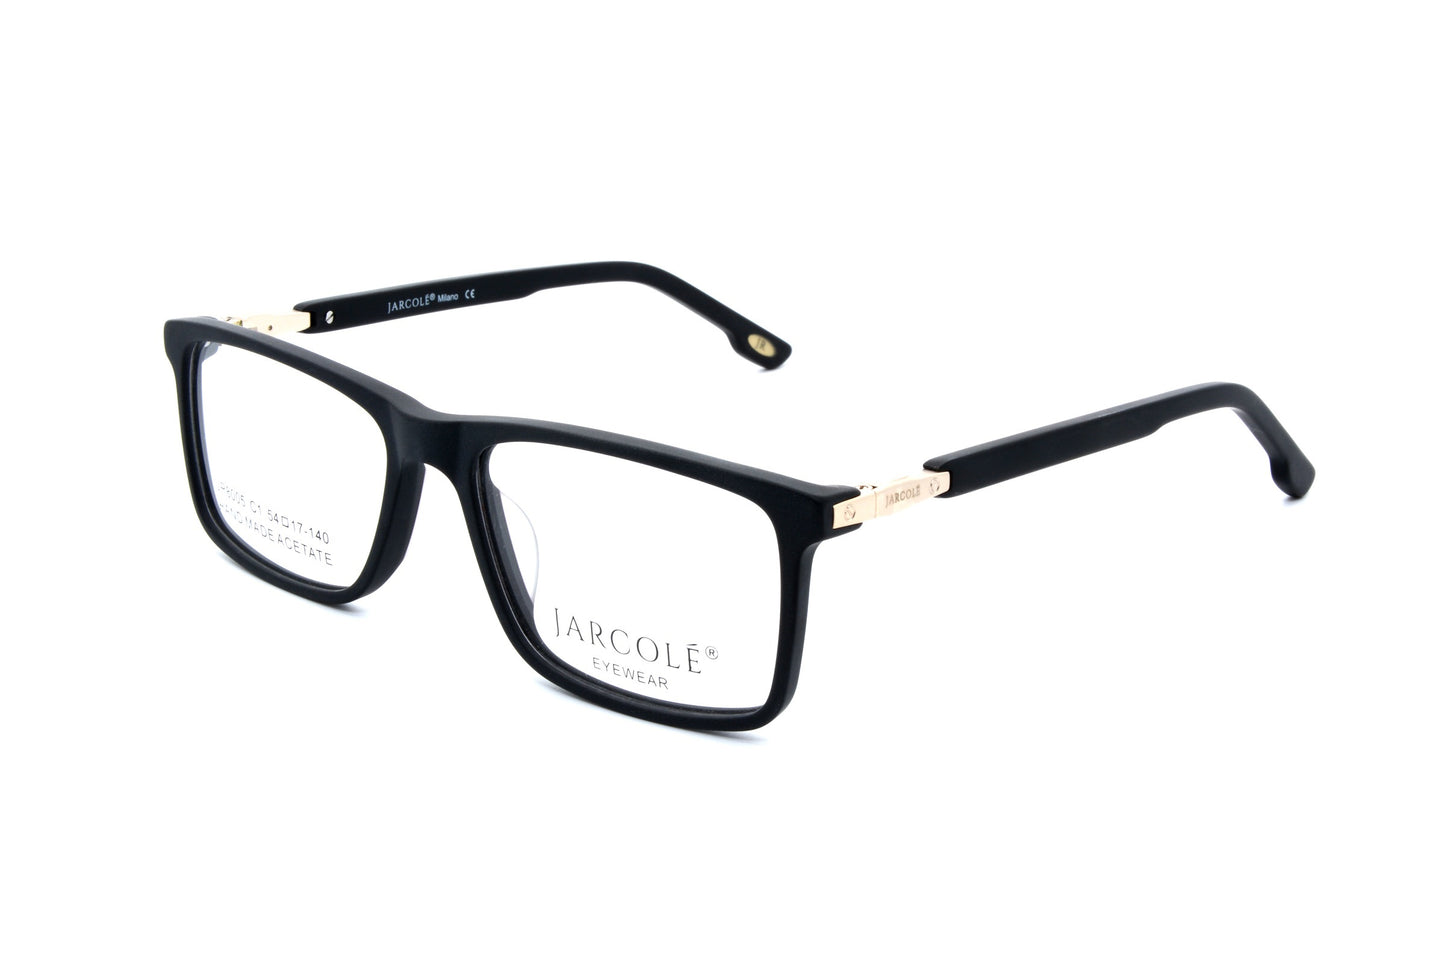 Jarcole eyewear 8005, C1 - Optics Trading